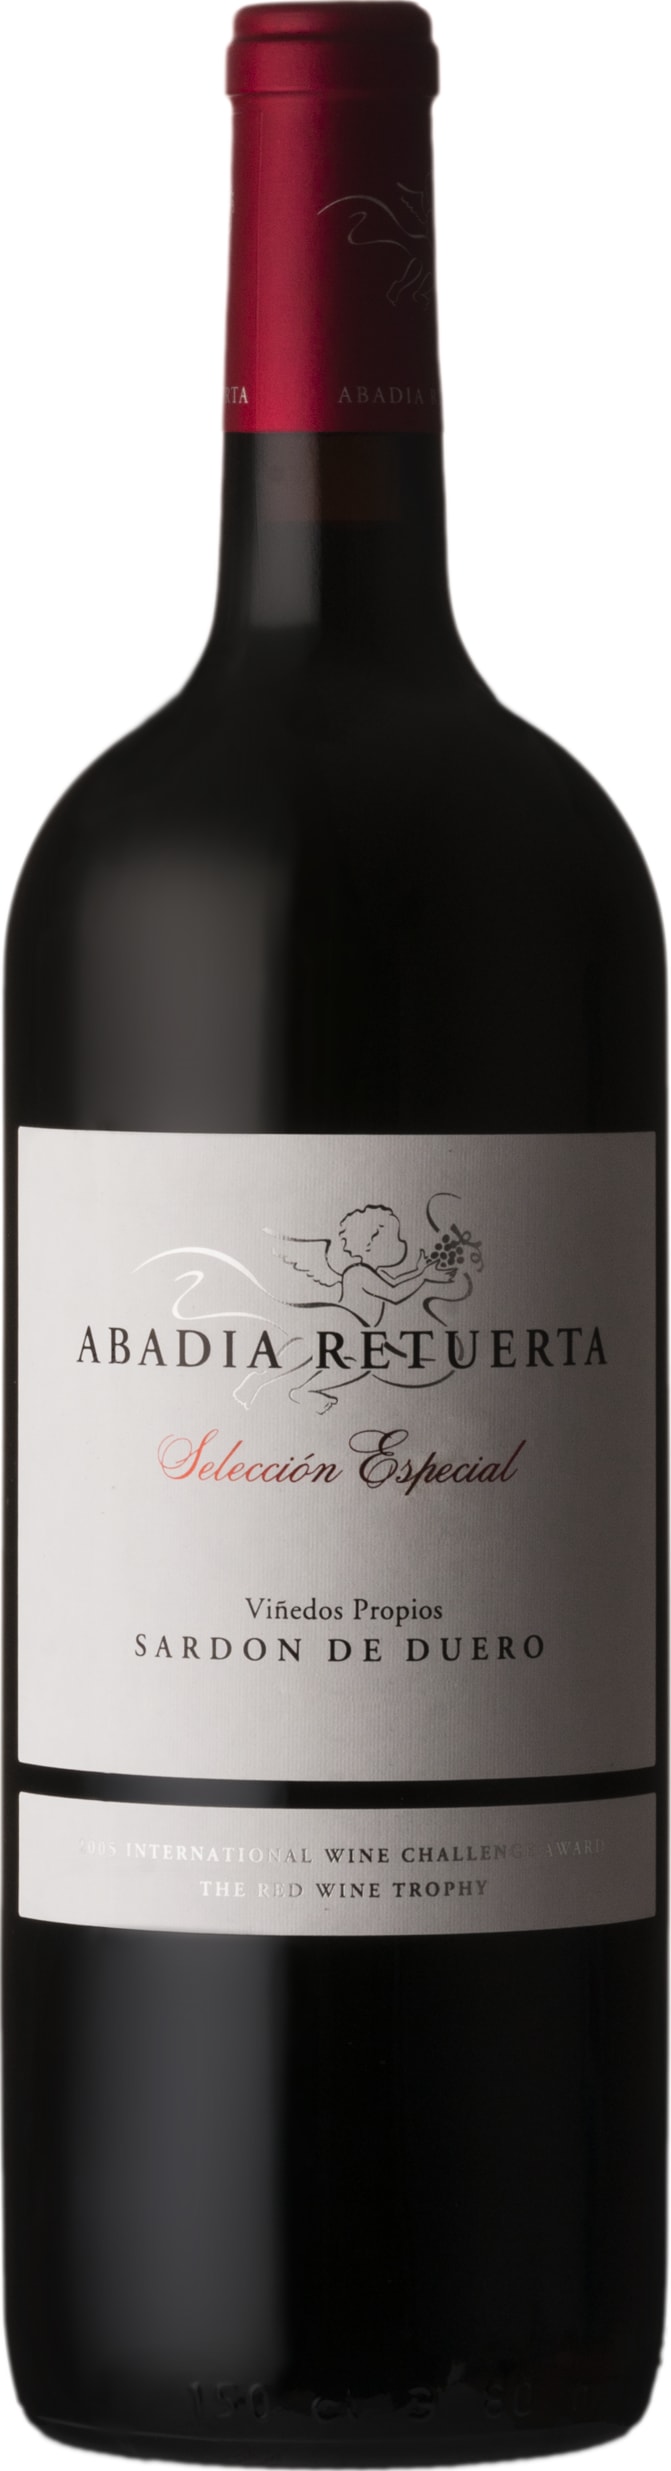 Abadia Retuerta Seleccion Especial Magnum 2018 150cl - Buy Abadia Retuerta Wines from GREAT WINES DIRECT wine shop